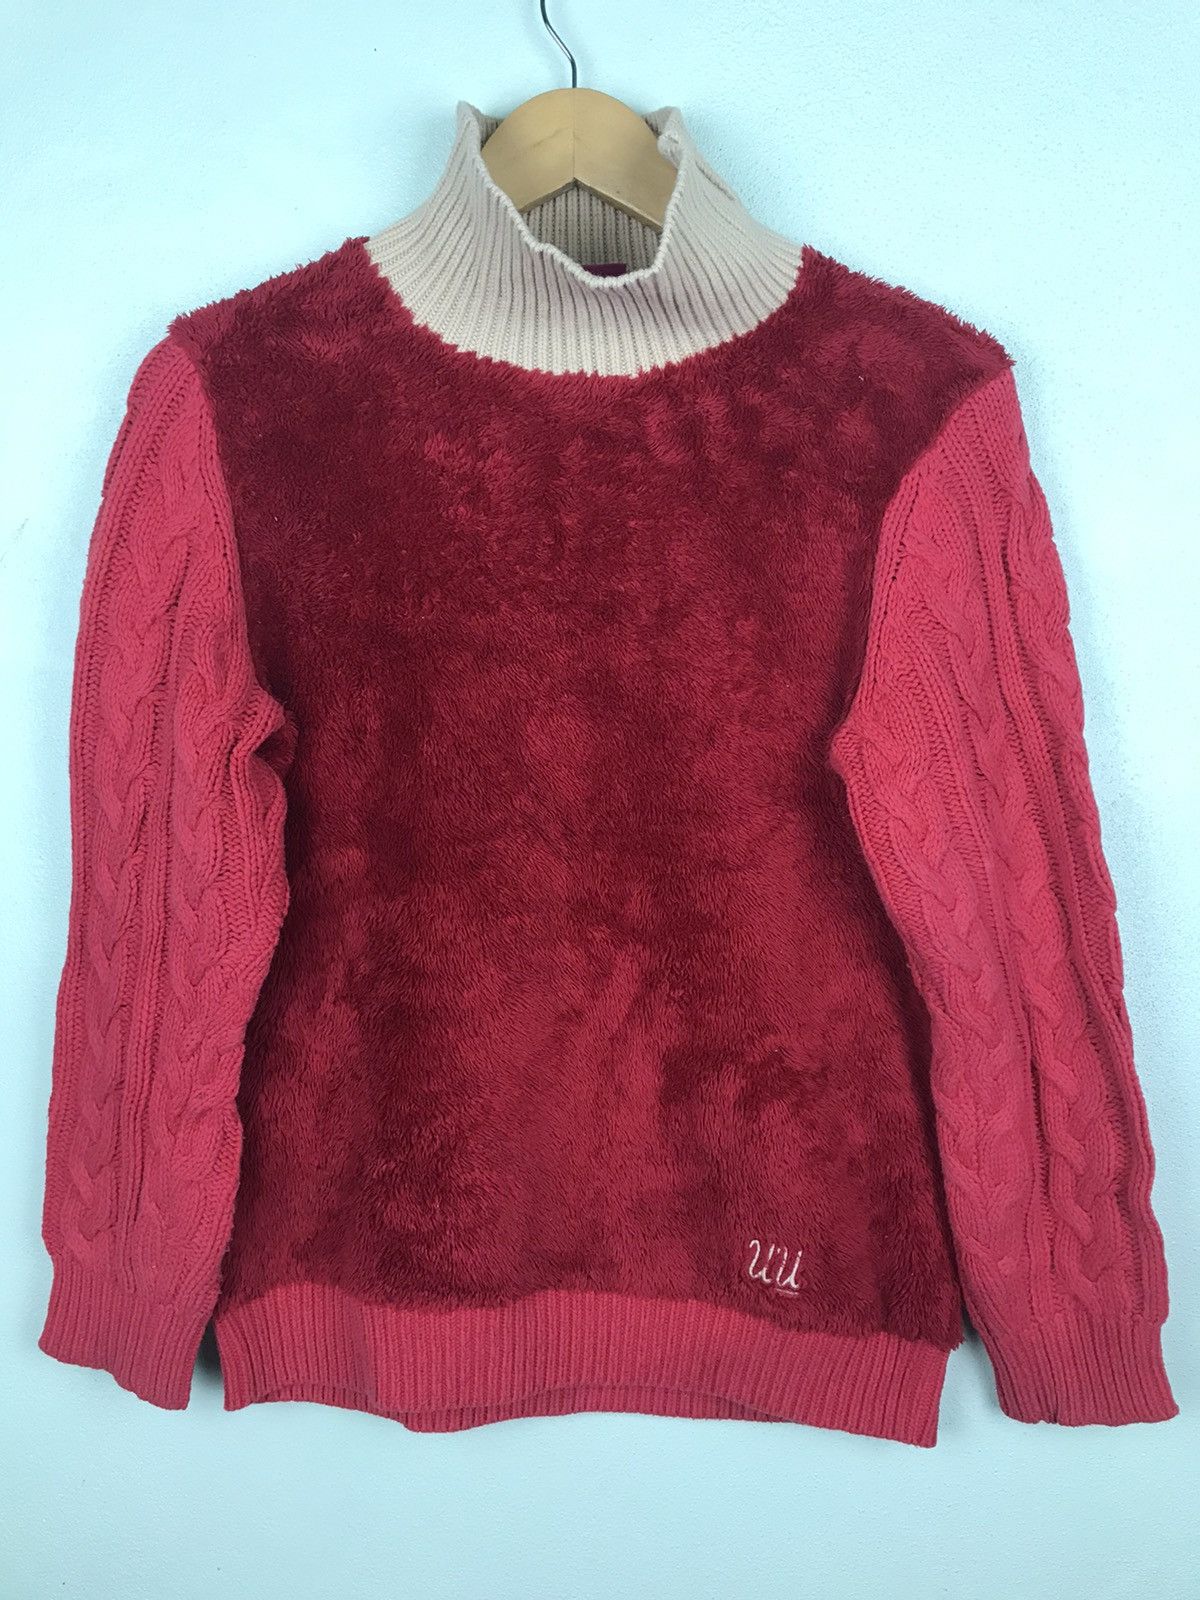 LAST DROP!Uniqlo undercover faux fur cable knit sweater-1519 - 1